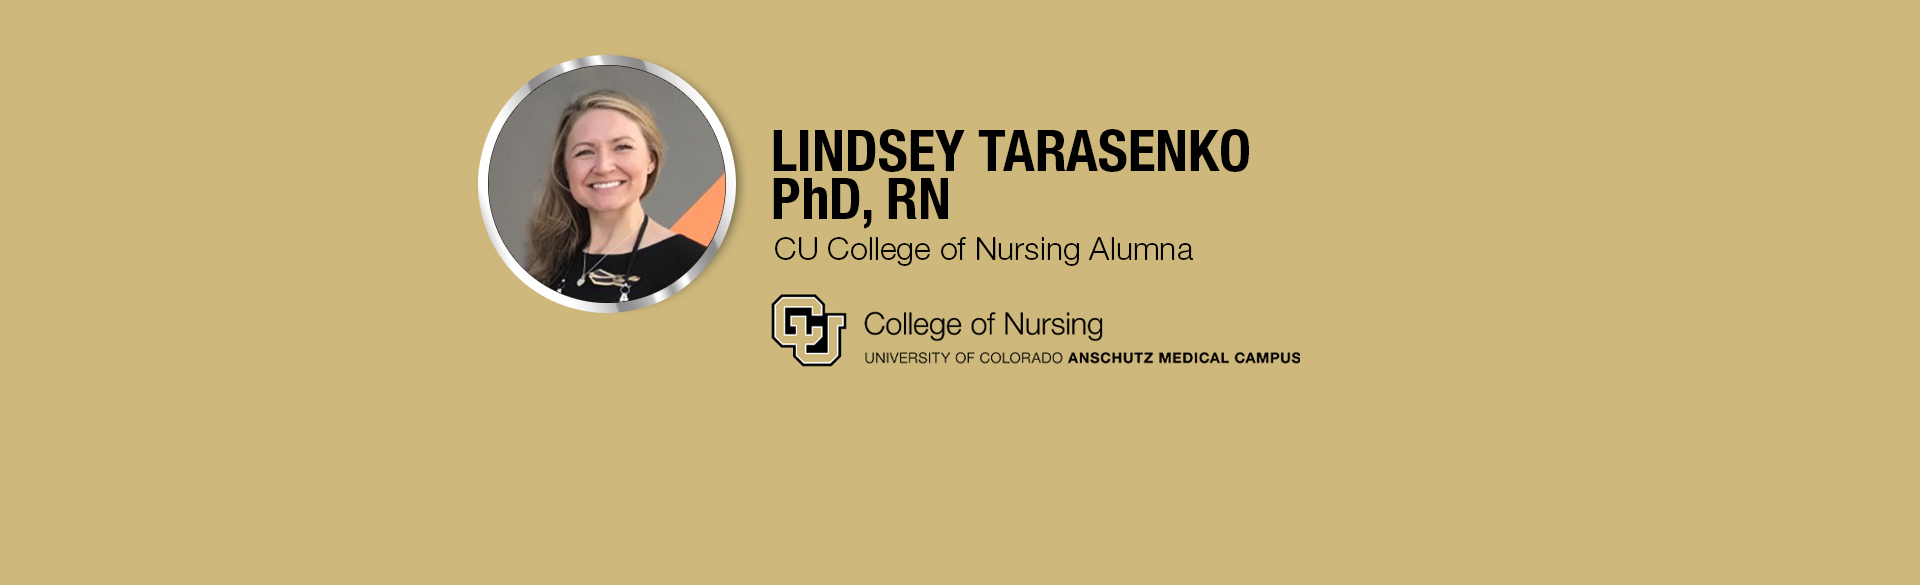 CU College of Nursing alumna Lindsey Tarasenko, PhD, RN 